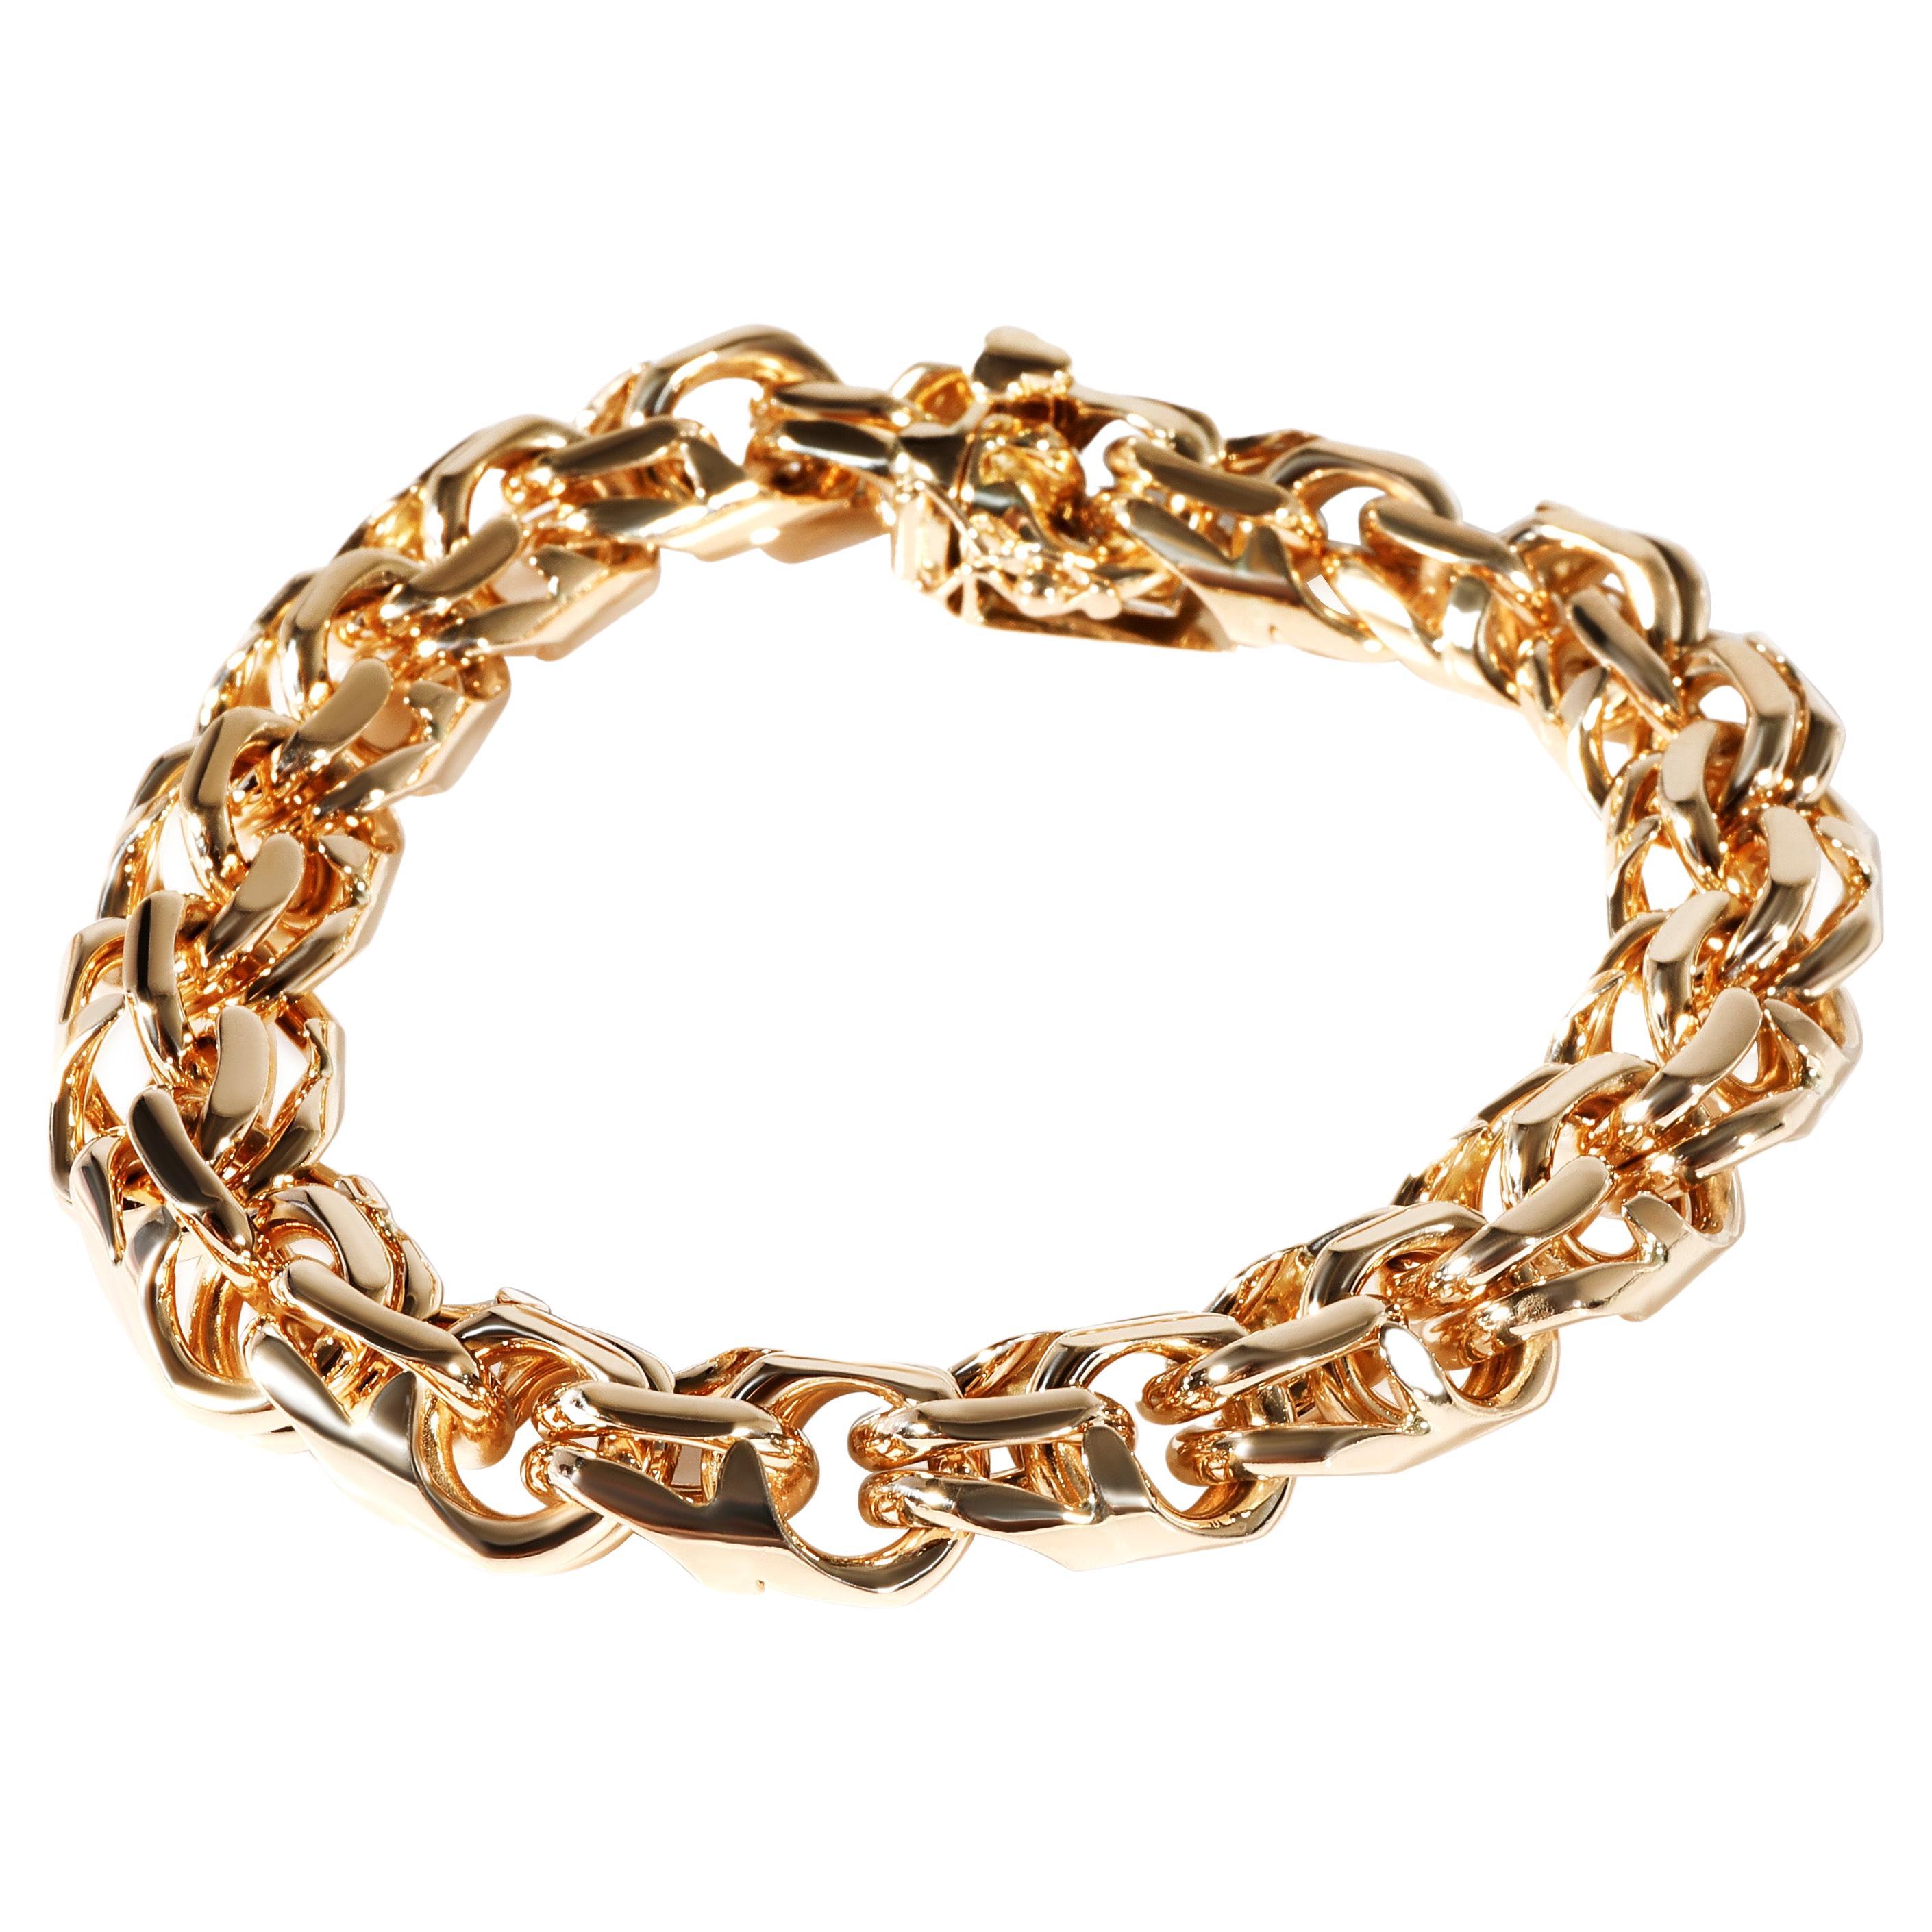 Tiffany & Co. Vintage Link Bracelet in 14K Yellow Gold